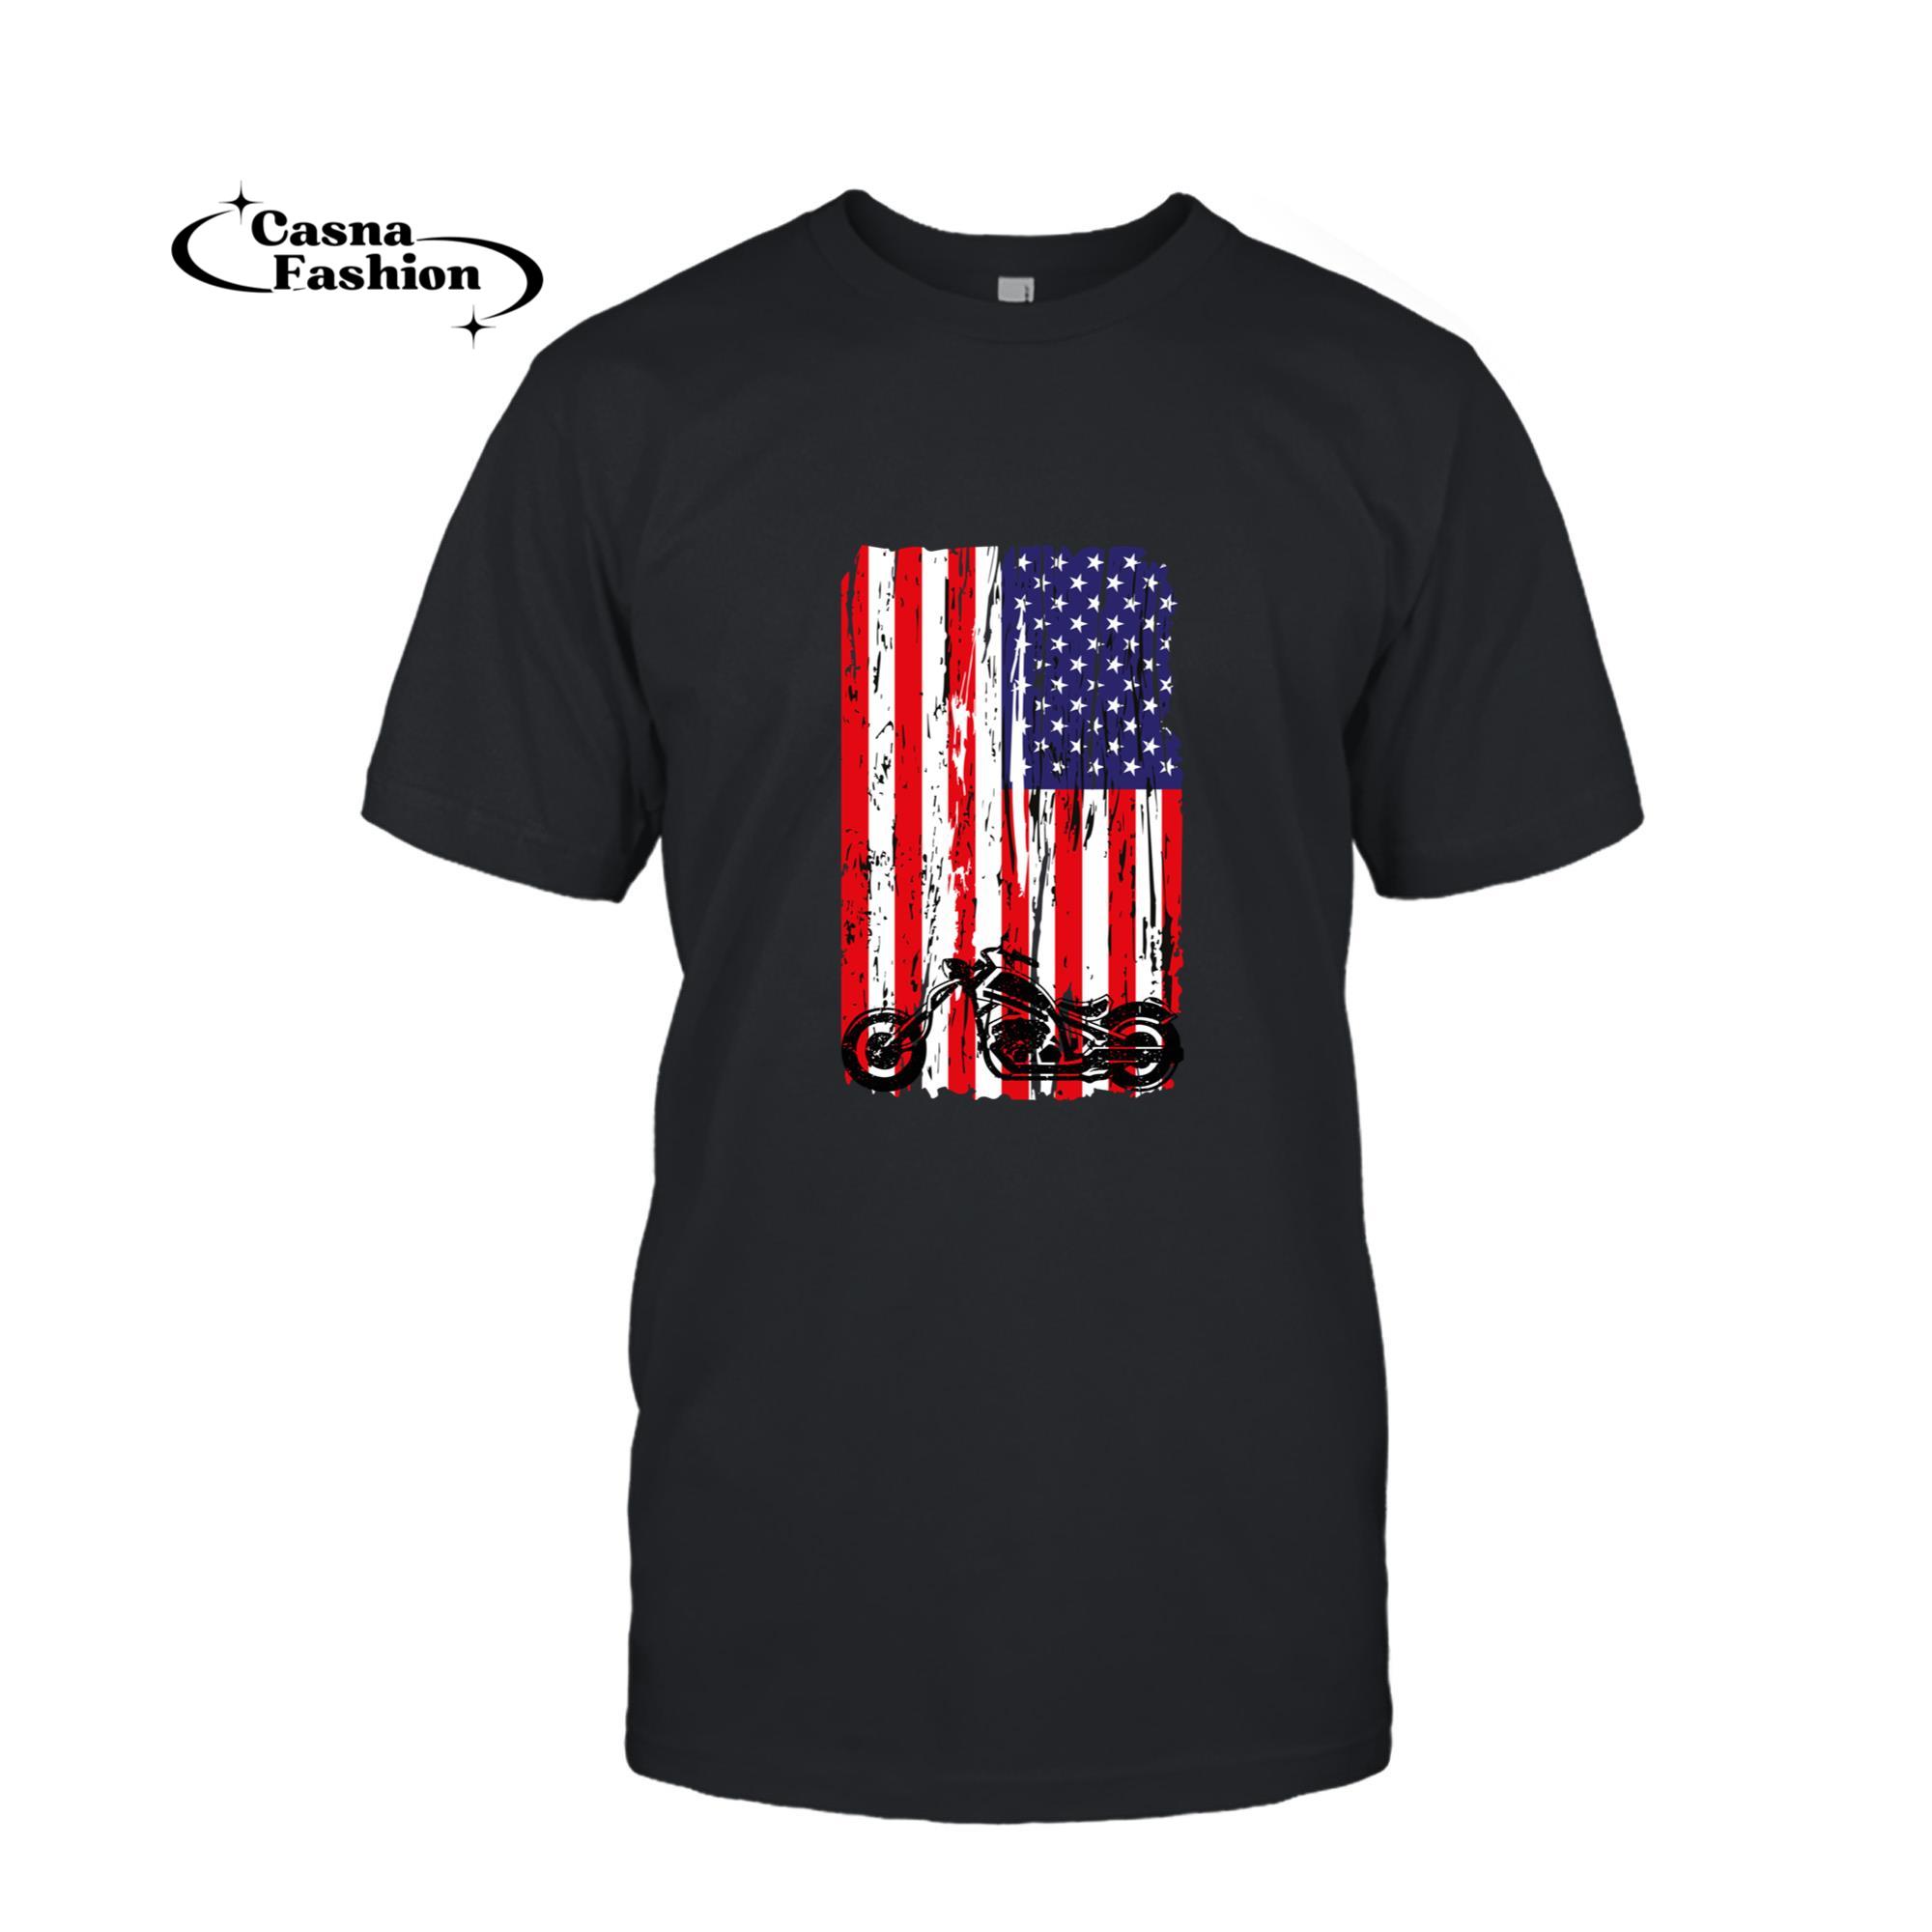 casnafashion_T-shirt_American Flag Motorcycle TShirt Biker Riding Motocross Gift Long Sleeve T-Shirt_T-shirt_Black